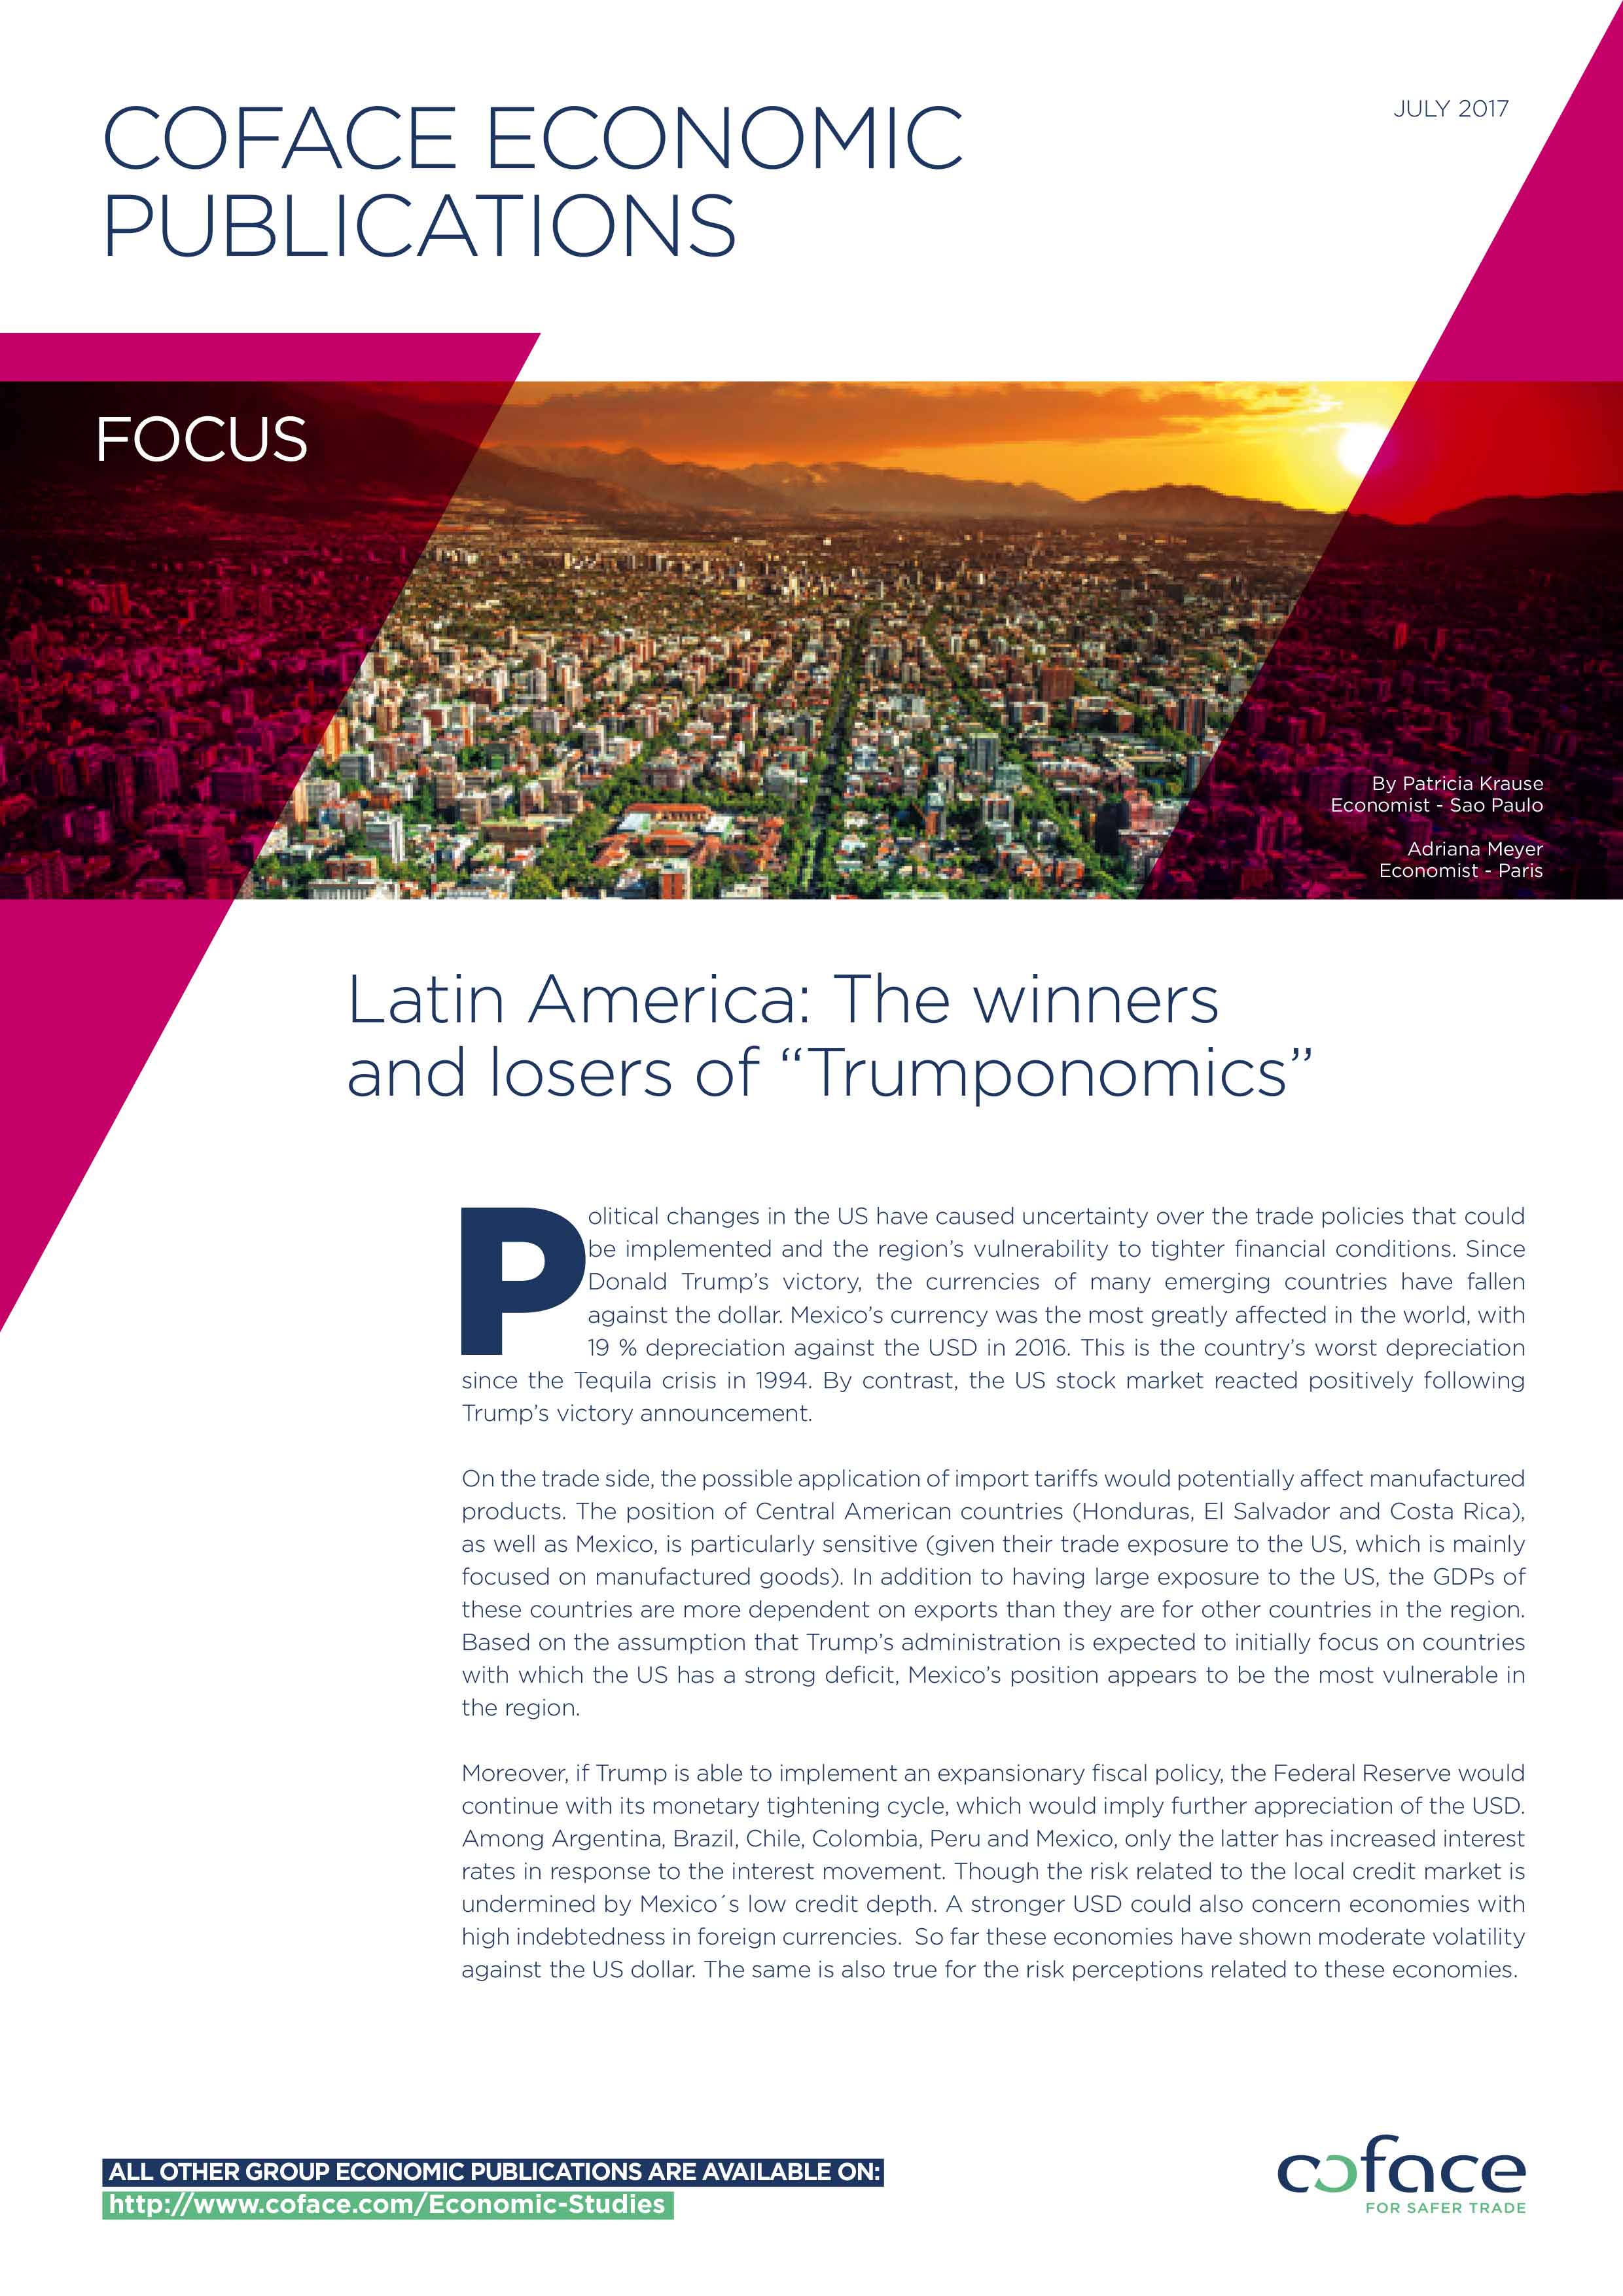 Latin America: The winners and losers of "Trumponomics"